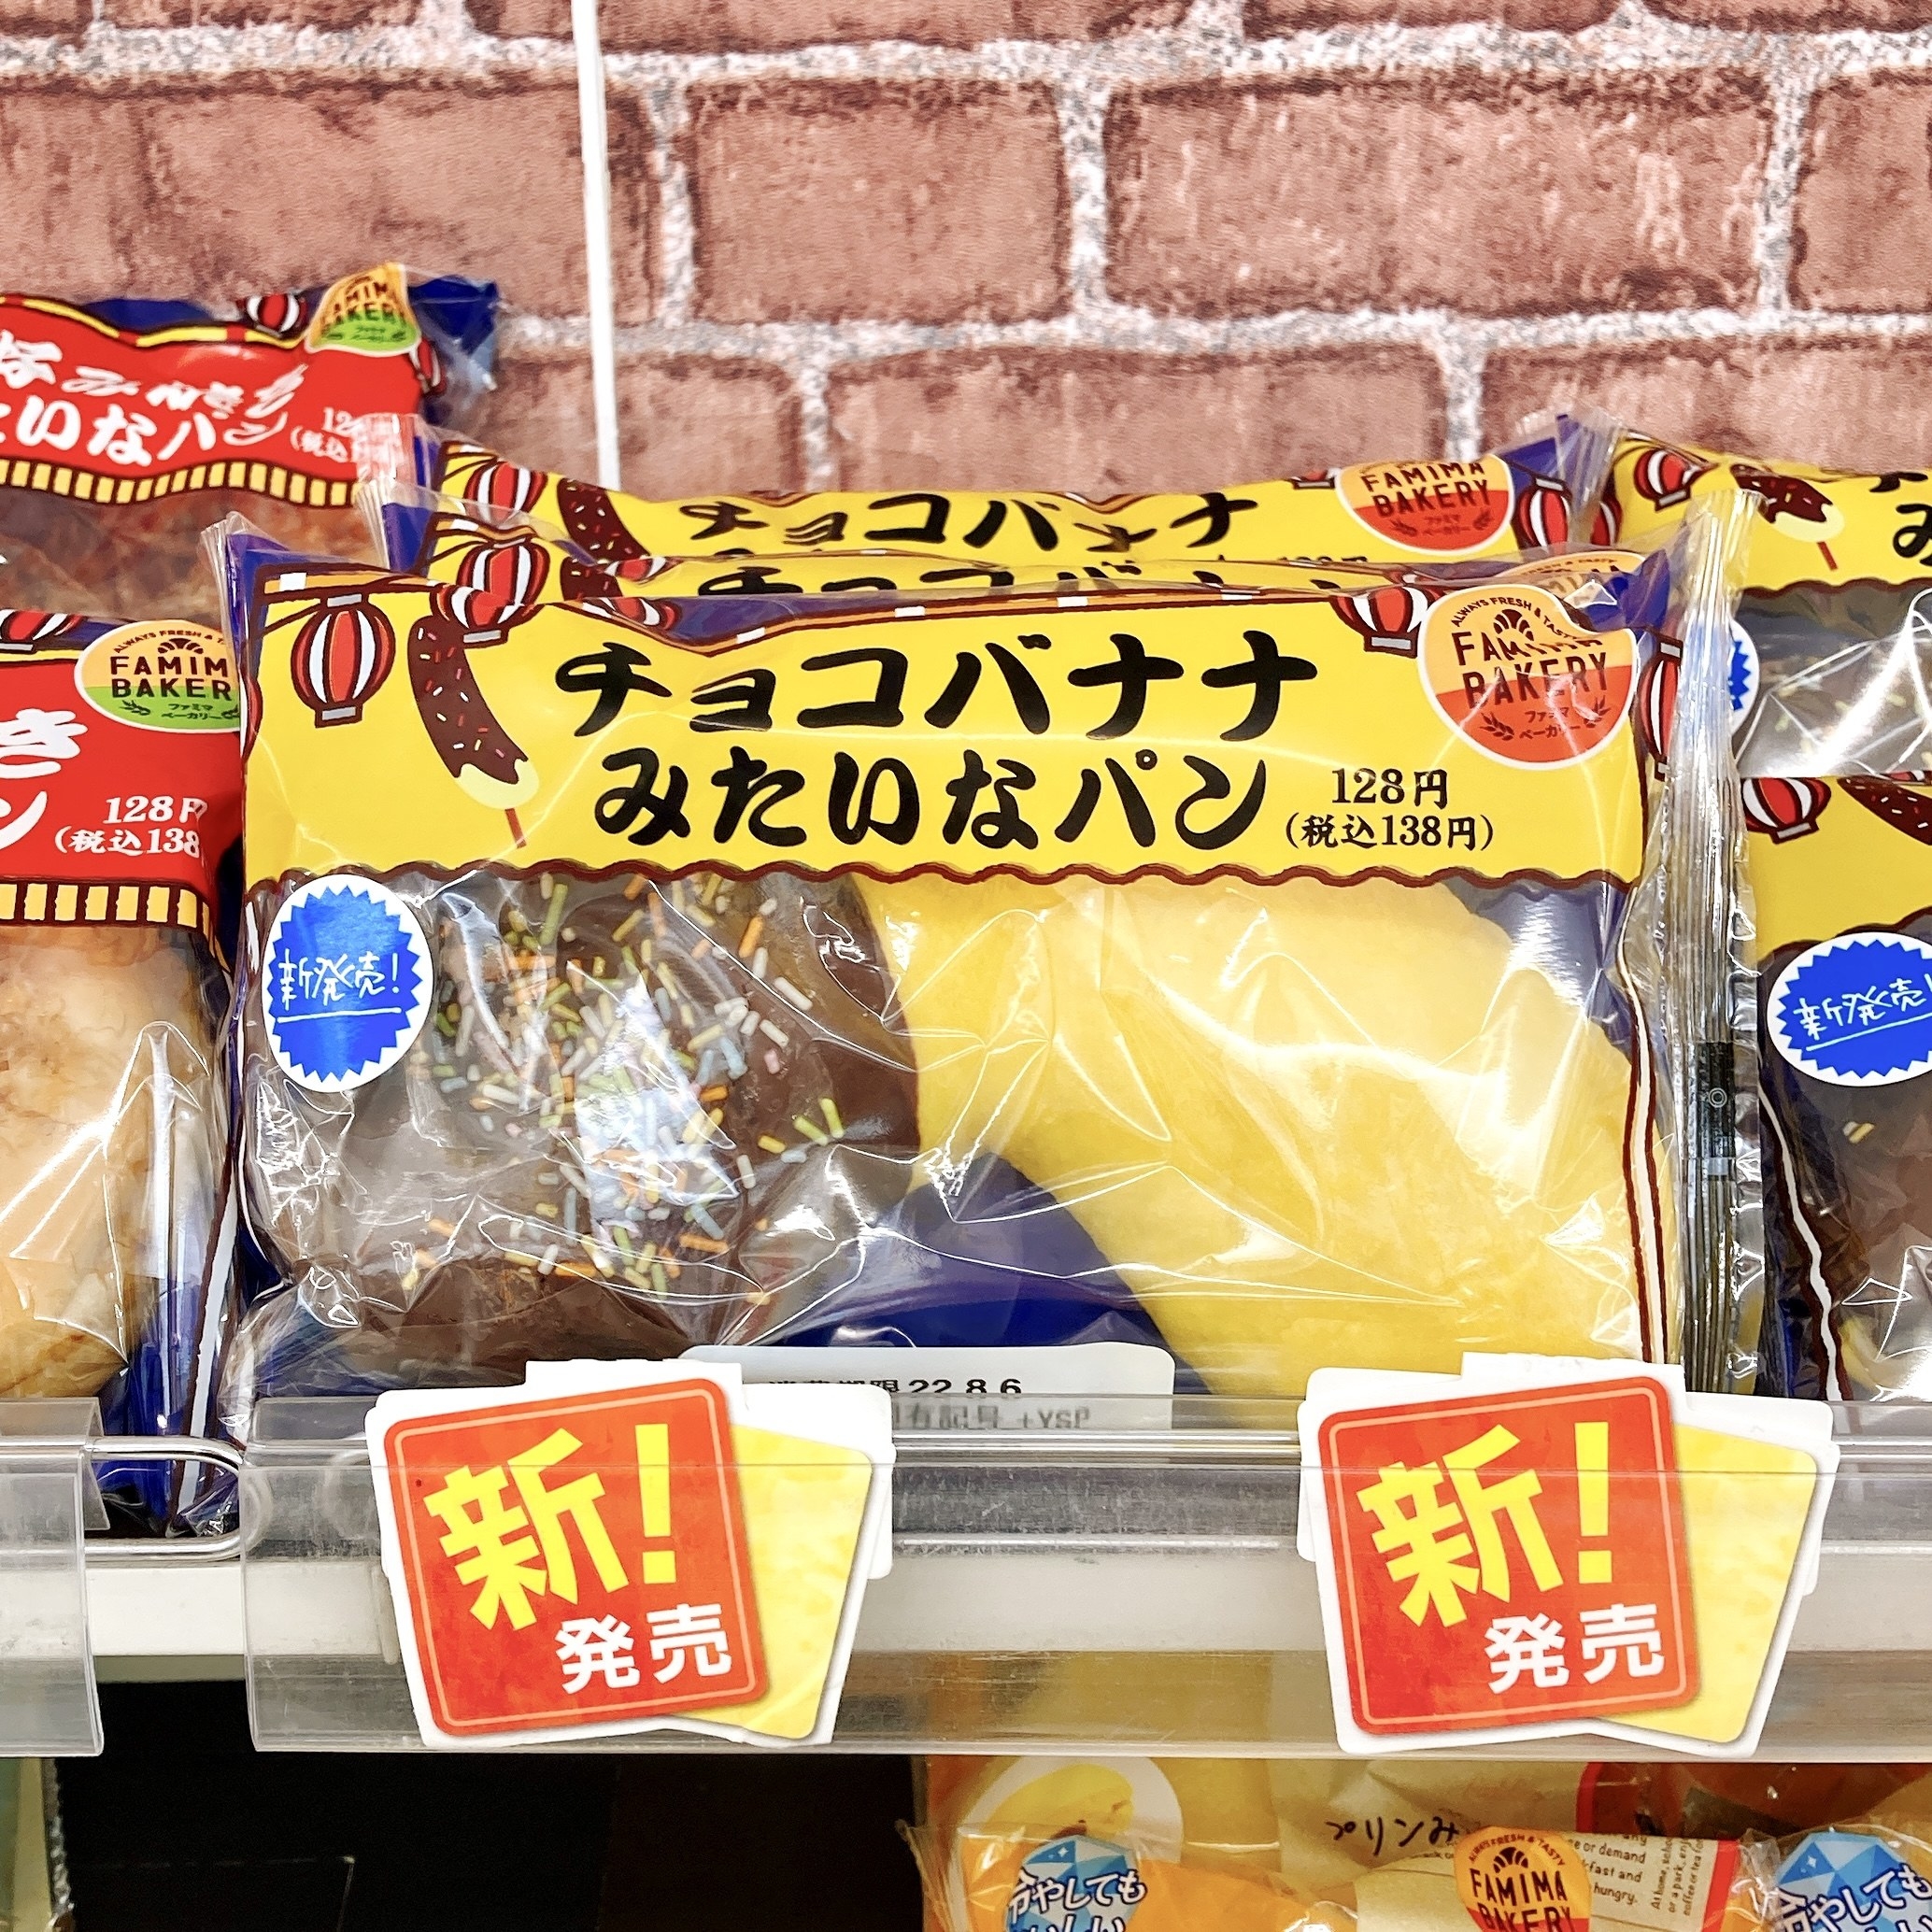 FamilyMart（ファミリーマート）でオススメの菓子パン「チョコバナナみたいなパン」